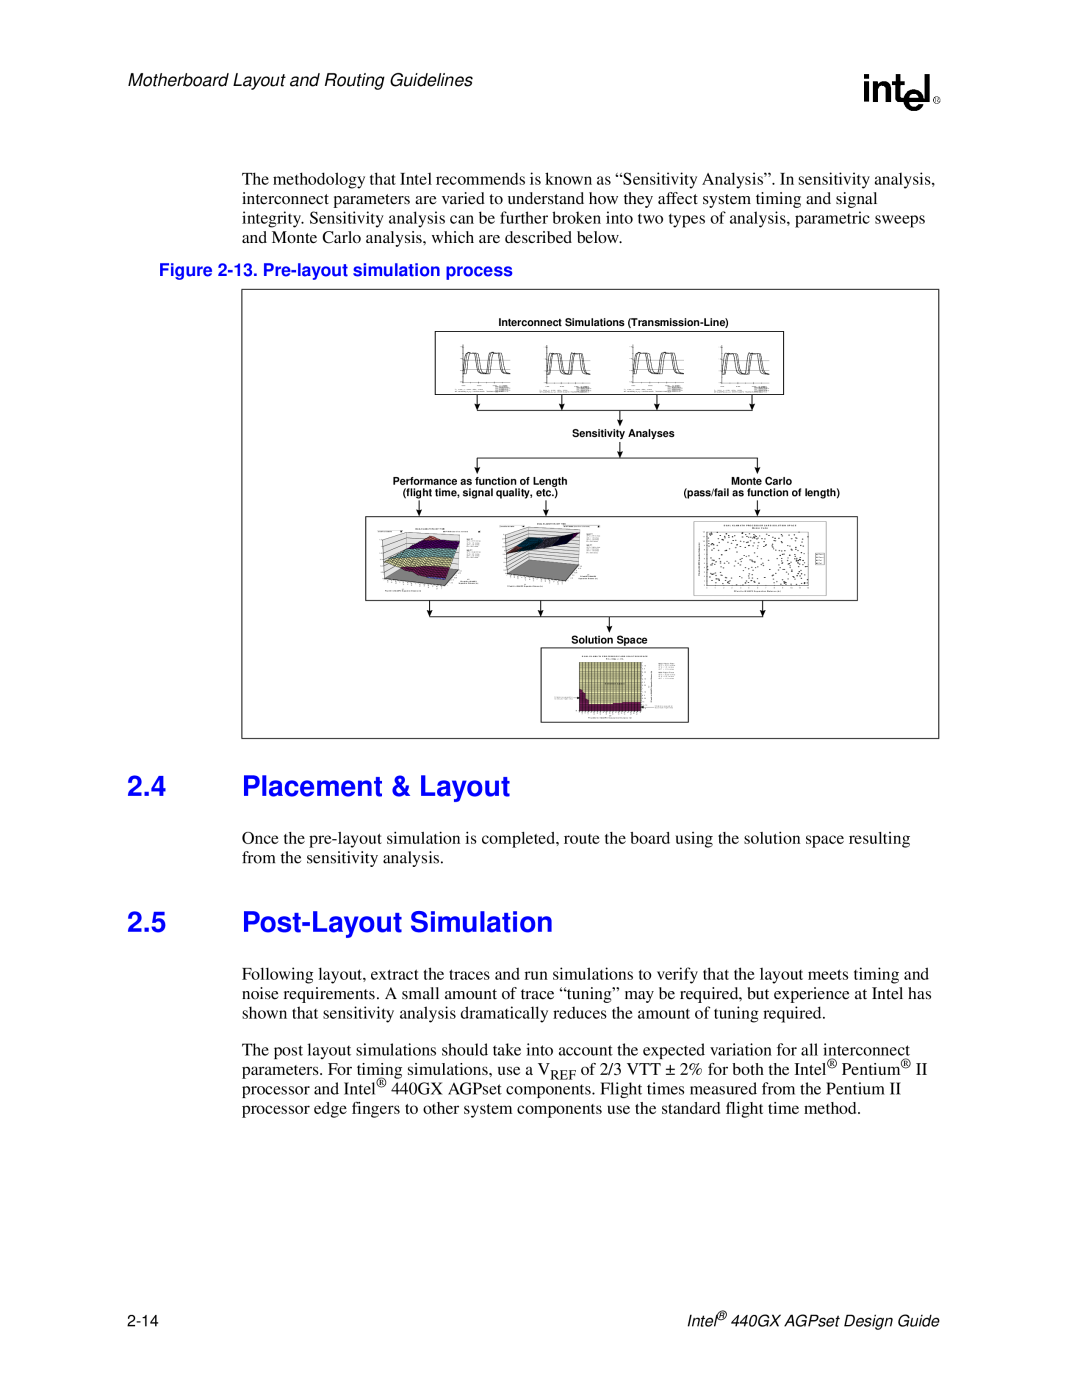 Intel 440GX manual Placement & Layout, Post-Layout Simulation, 13. Pre-layout simulation process 